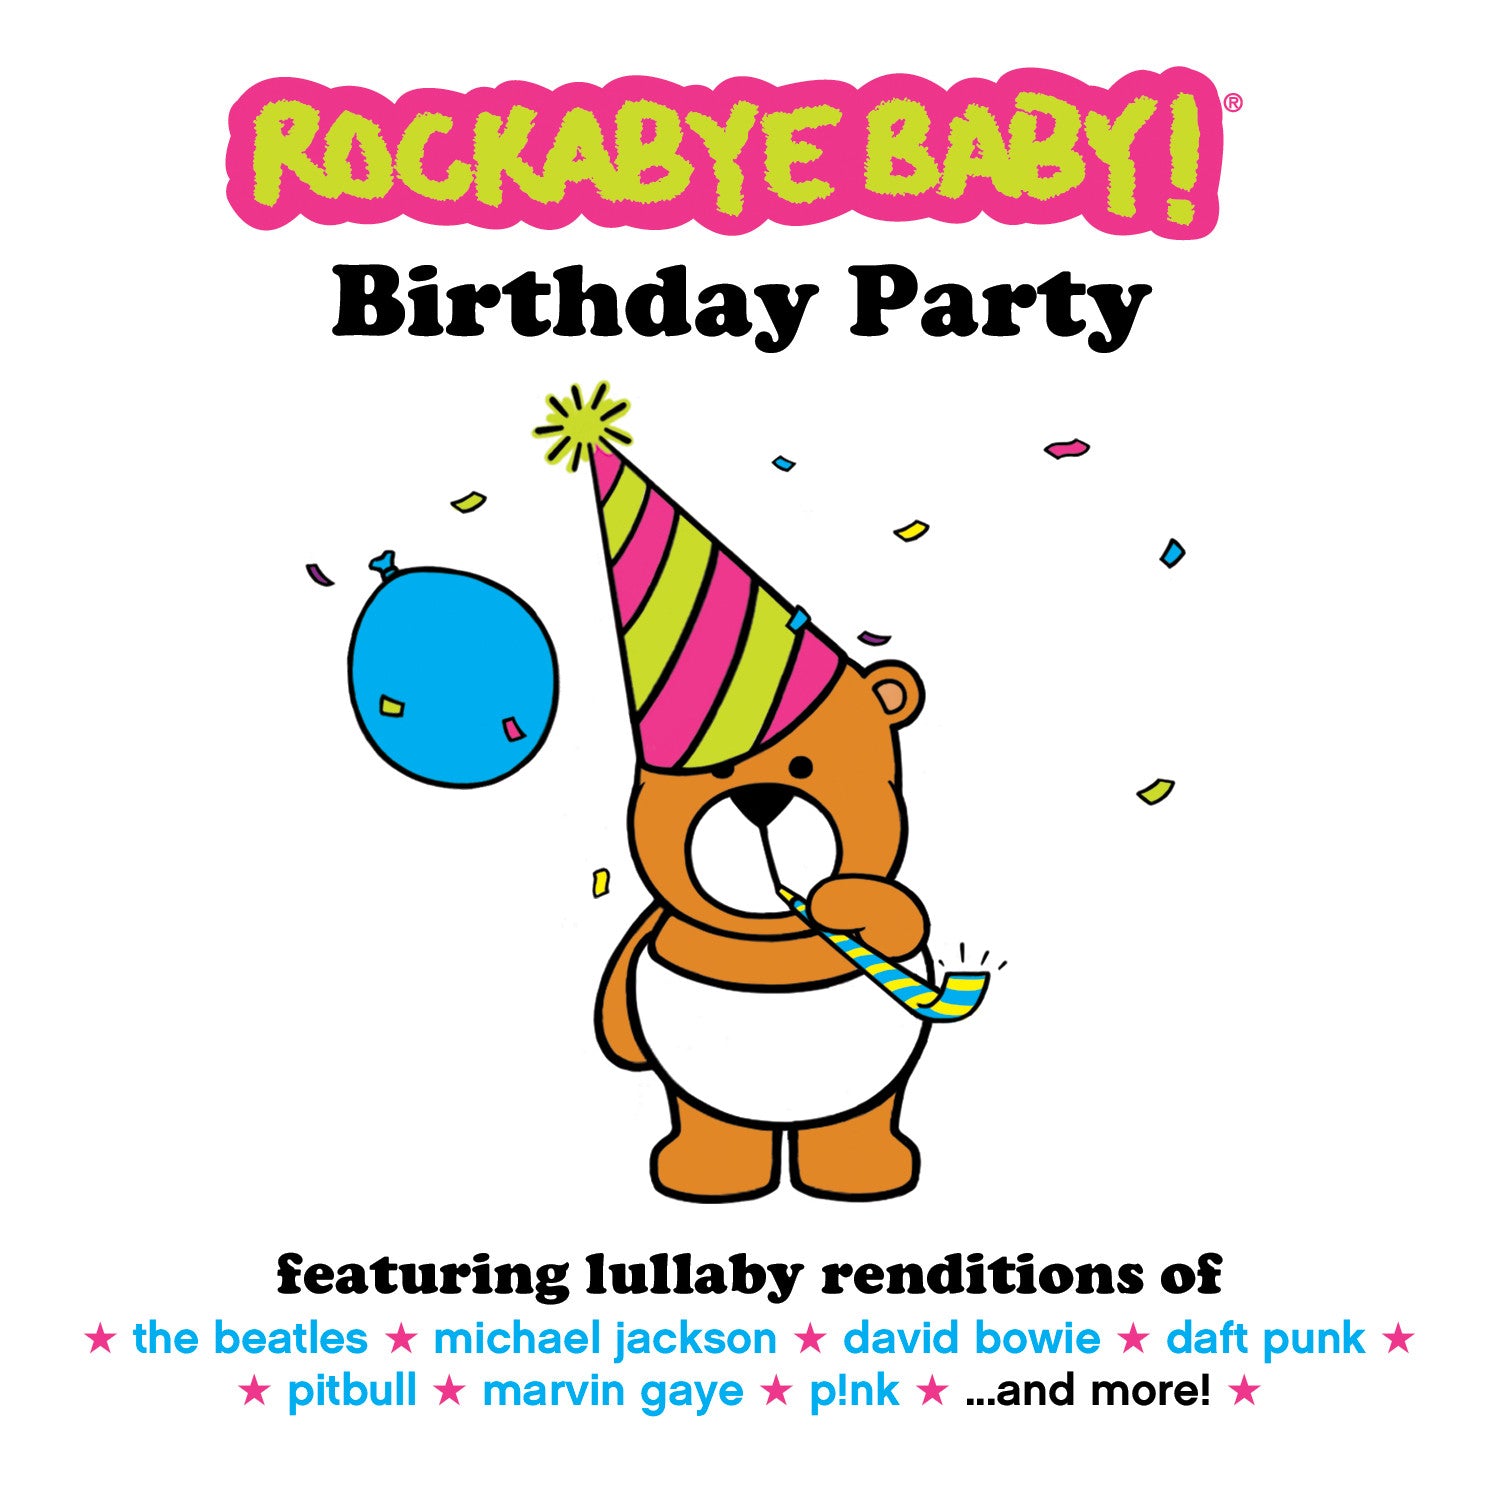 rockabye baby birthday party compilation